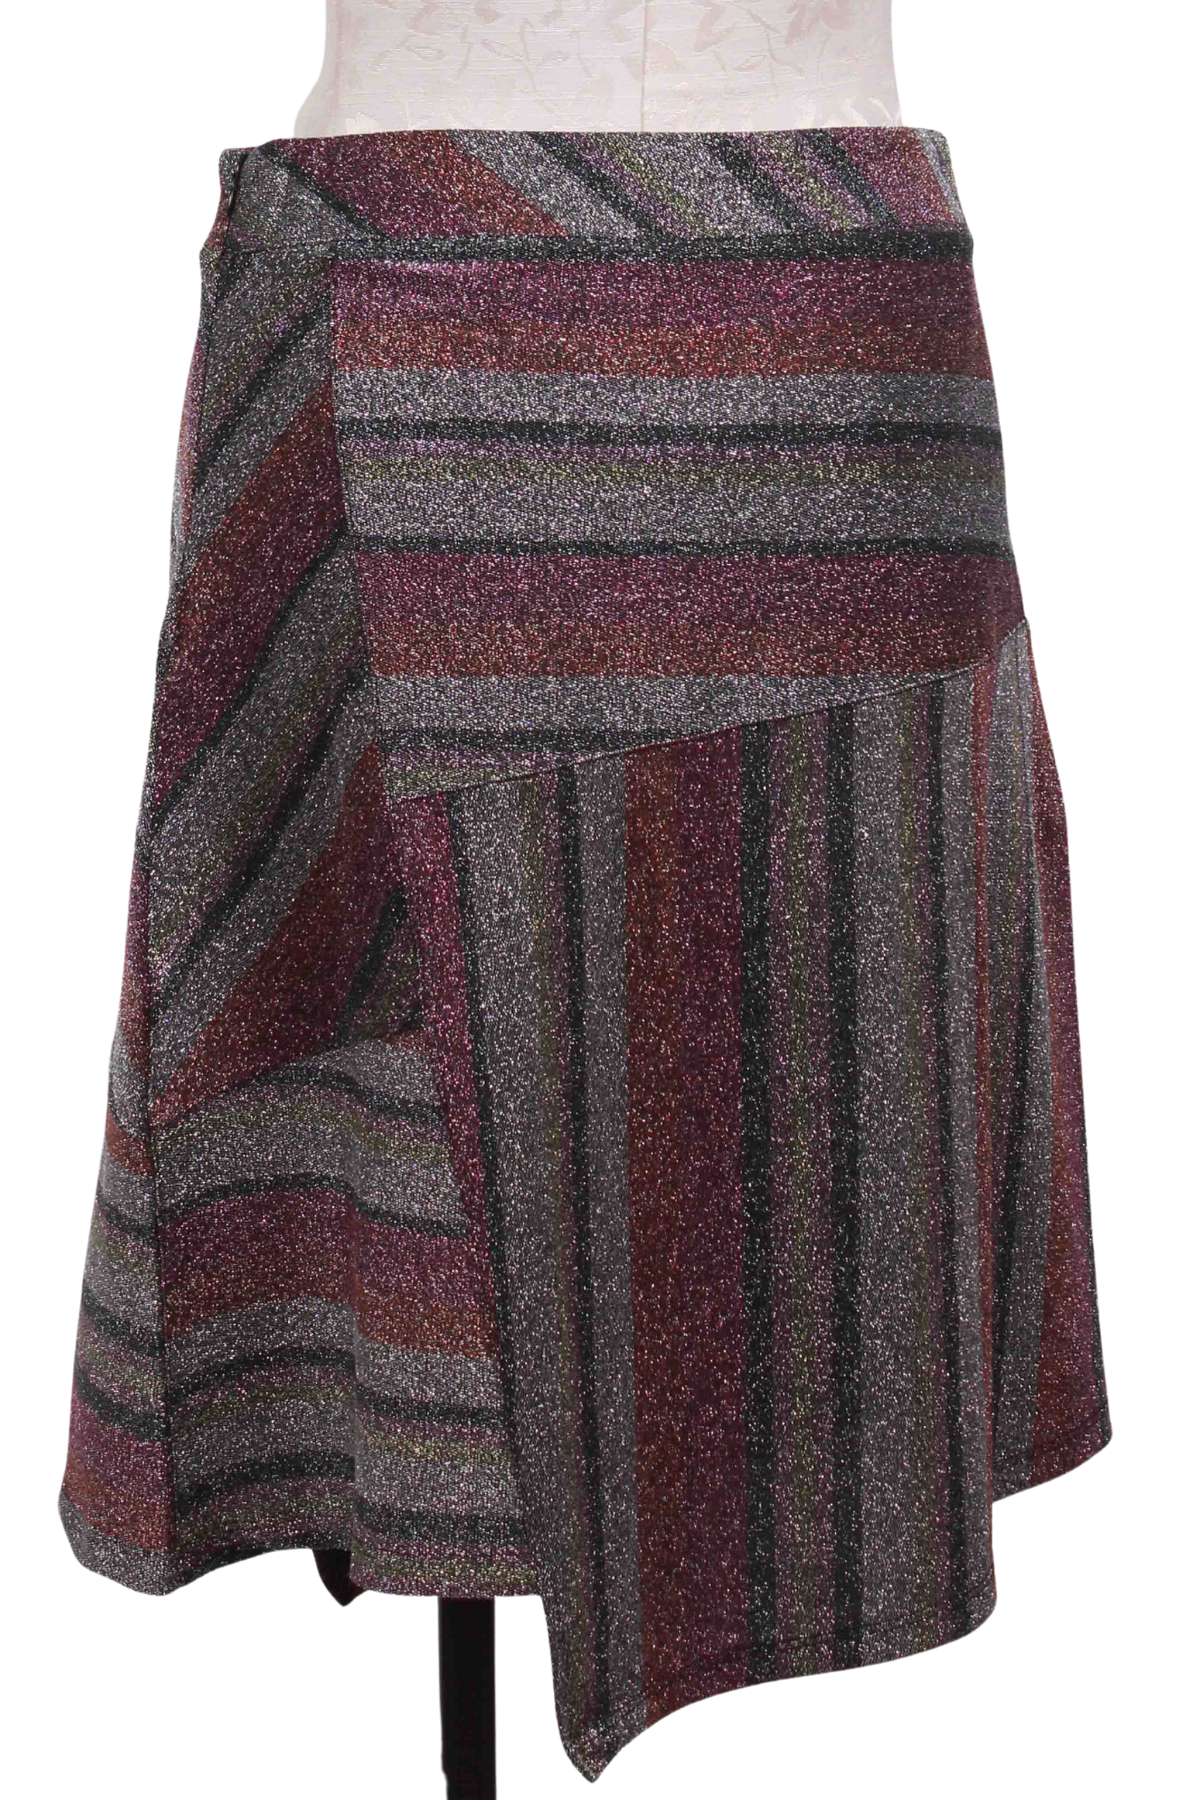 back view of Novella Stripe Cava Skirt by Isle by Melis Kozan